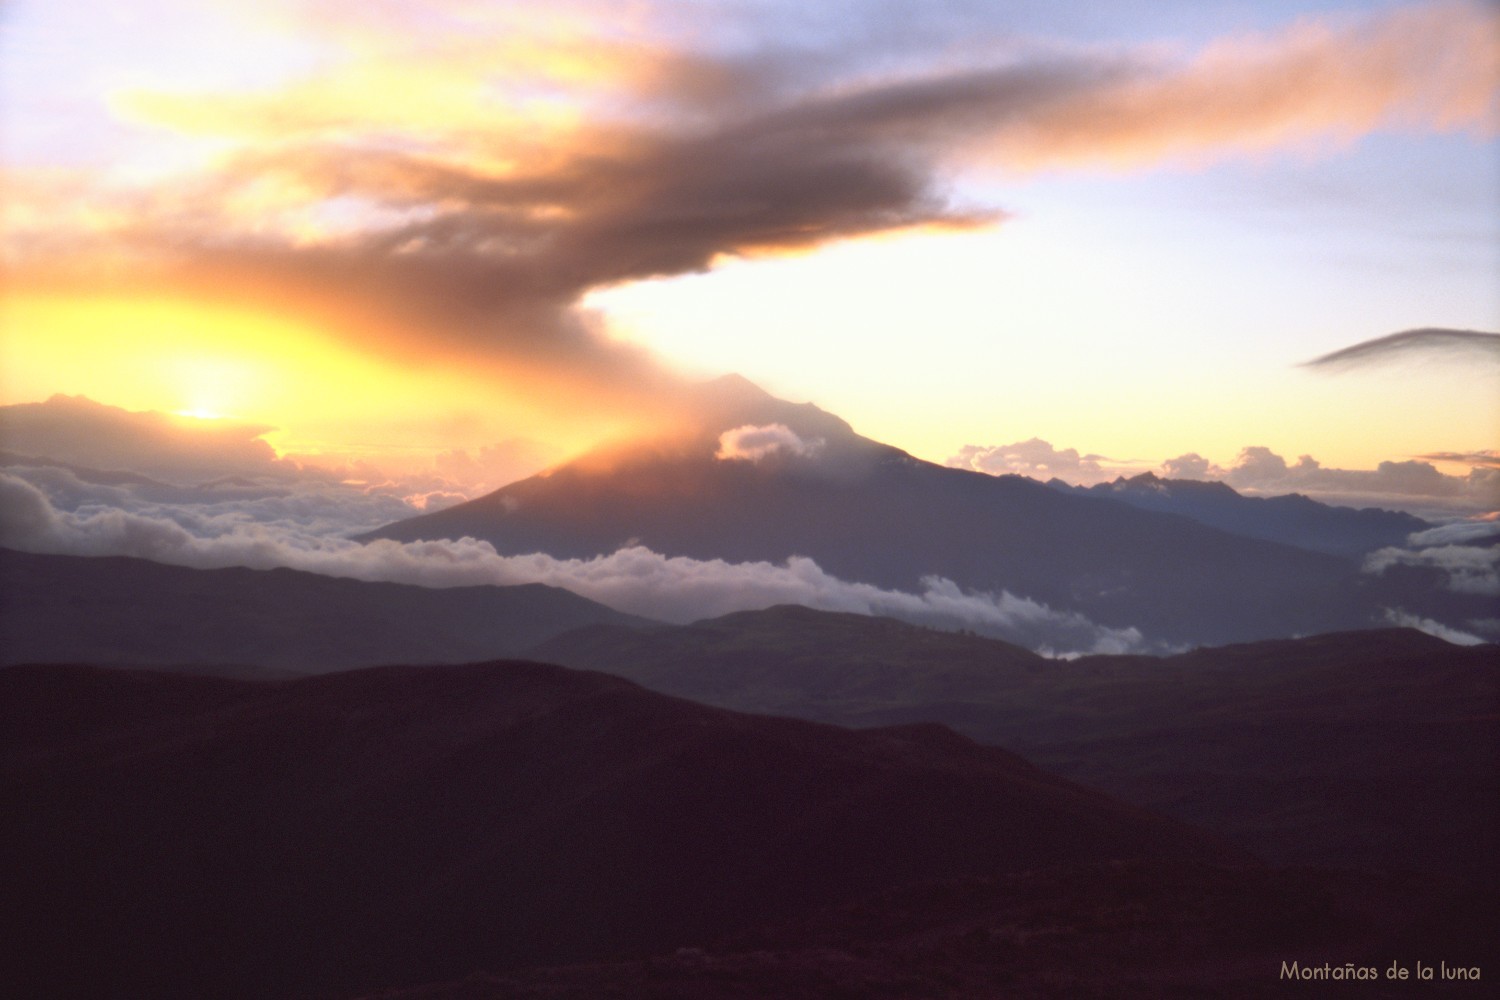 El Volcán Tungurahua desde la cima del Igualata